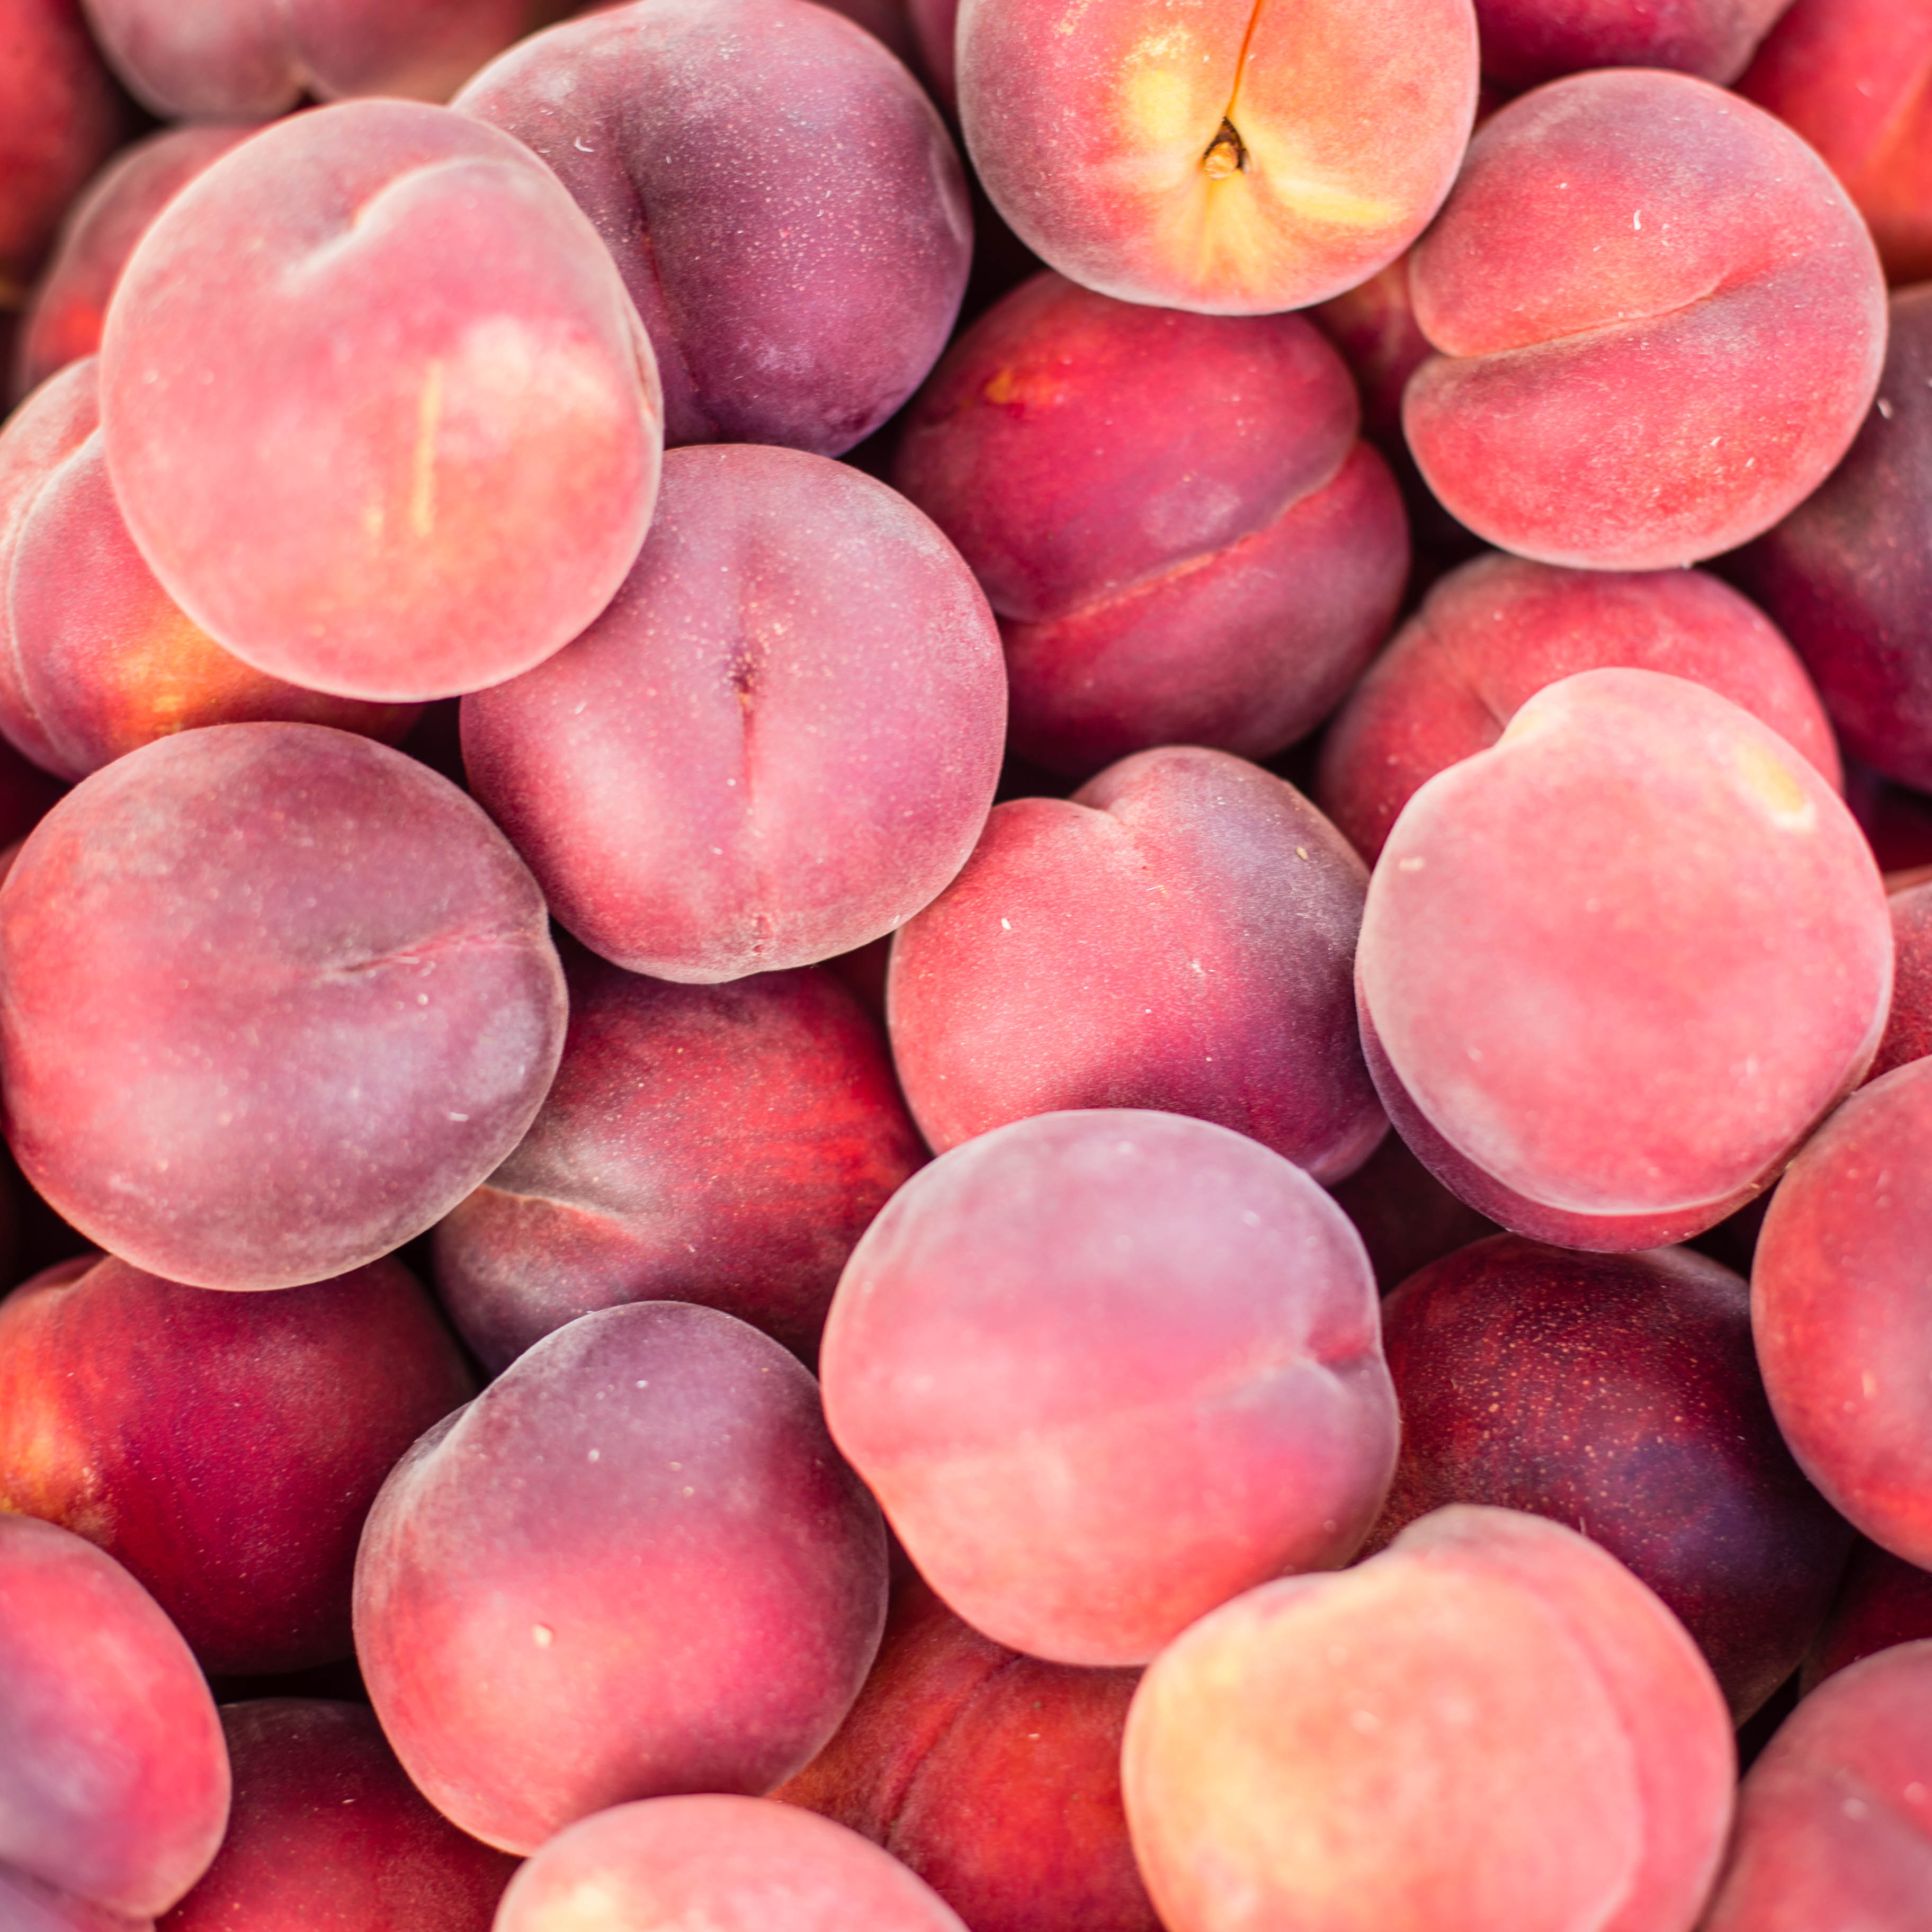 Peaches 1080p. peaches, food, fruits, red, ripe Full HD. 